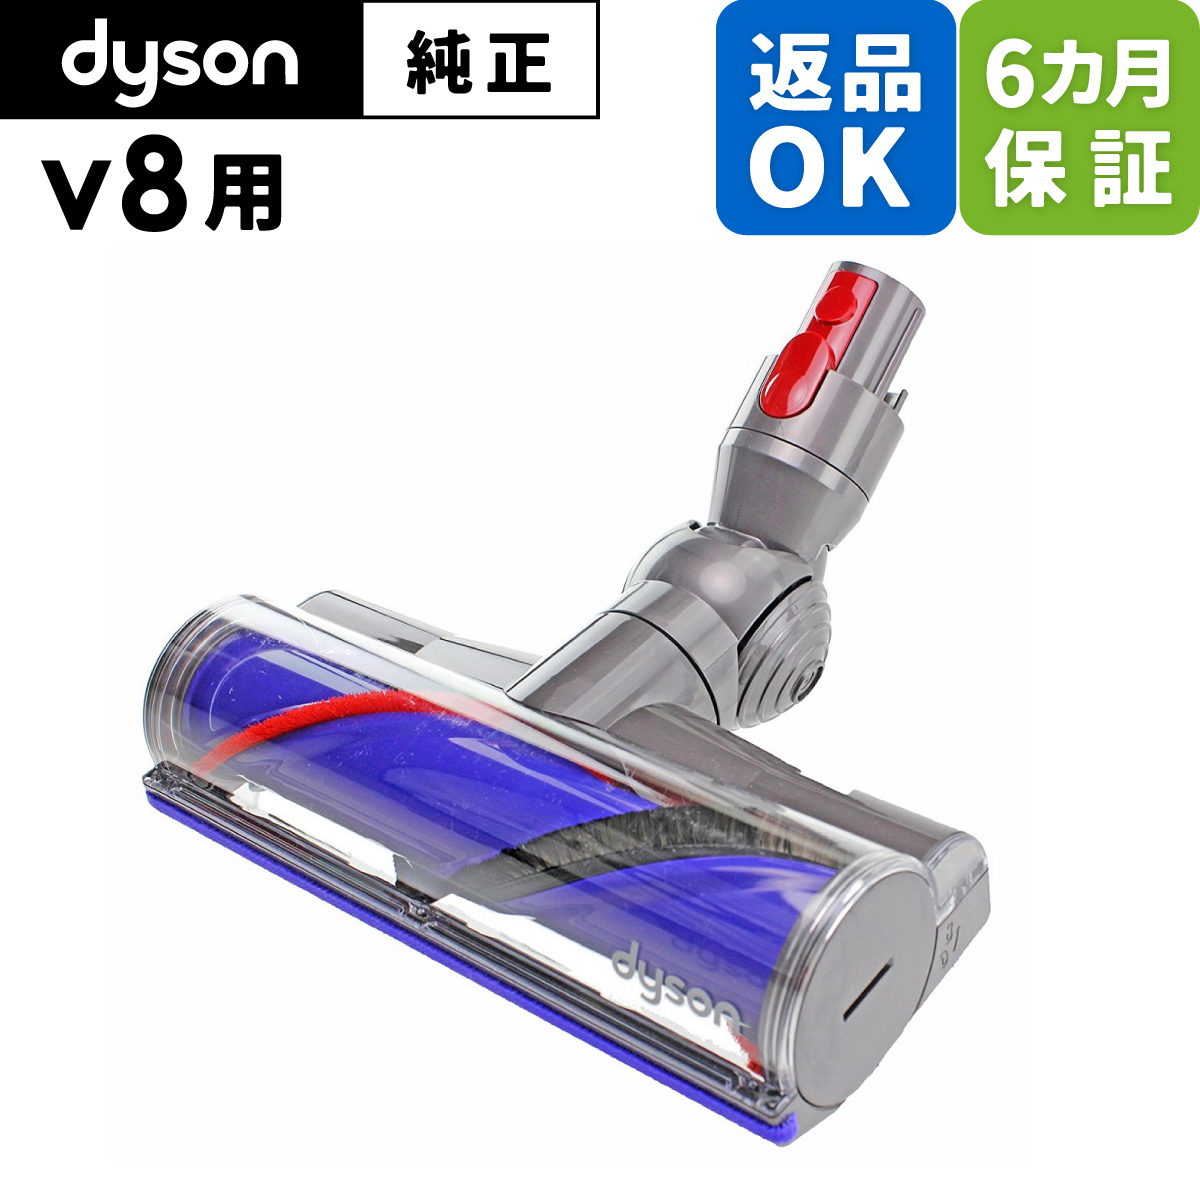 Dyson ダイソン 掃除機 純正 パーツ 返品OK 6カ月保証 ダイレクトドライブクリーナーヘッド V8 適合 モデル 部品 交換 ※slim対象外